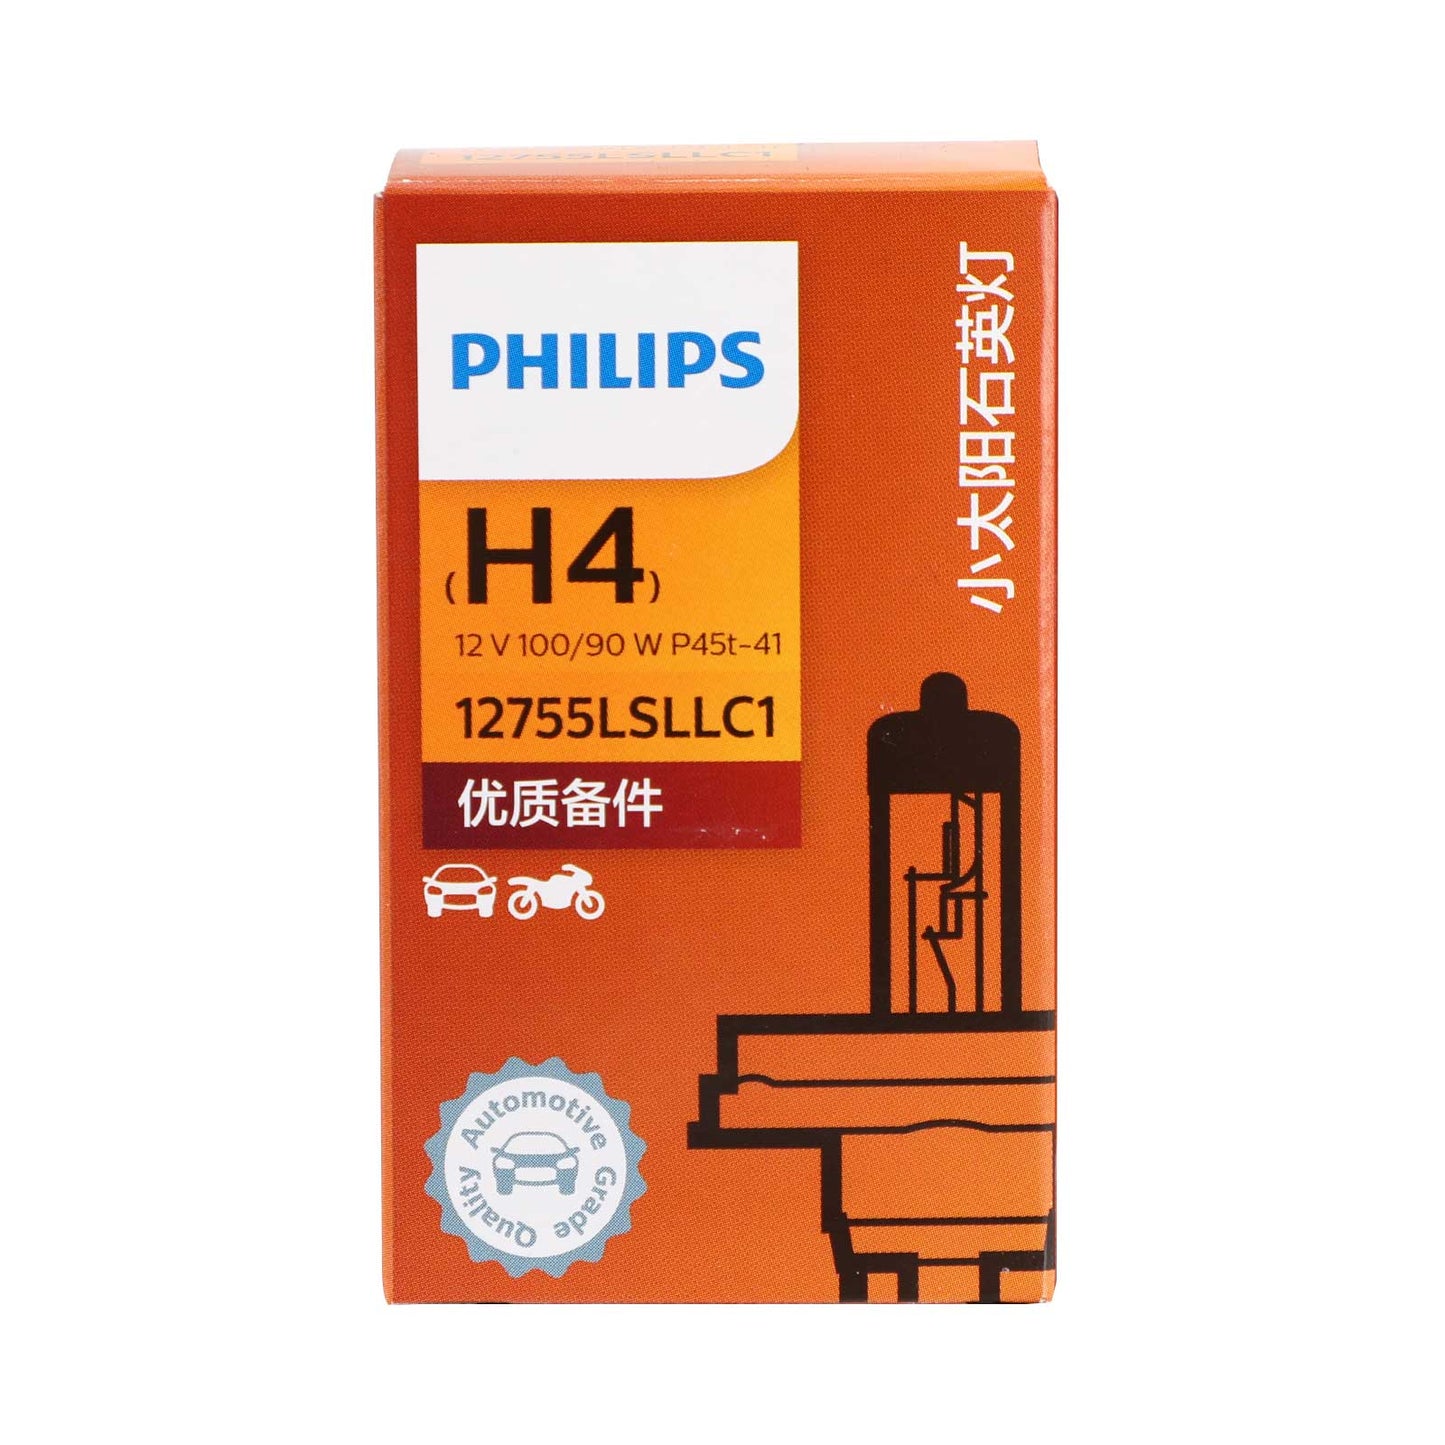 For Philips H4 LittleSun Quartz Halogen Headlight 100/90W P45t-38 12755LSLLC1